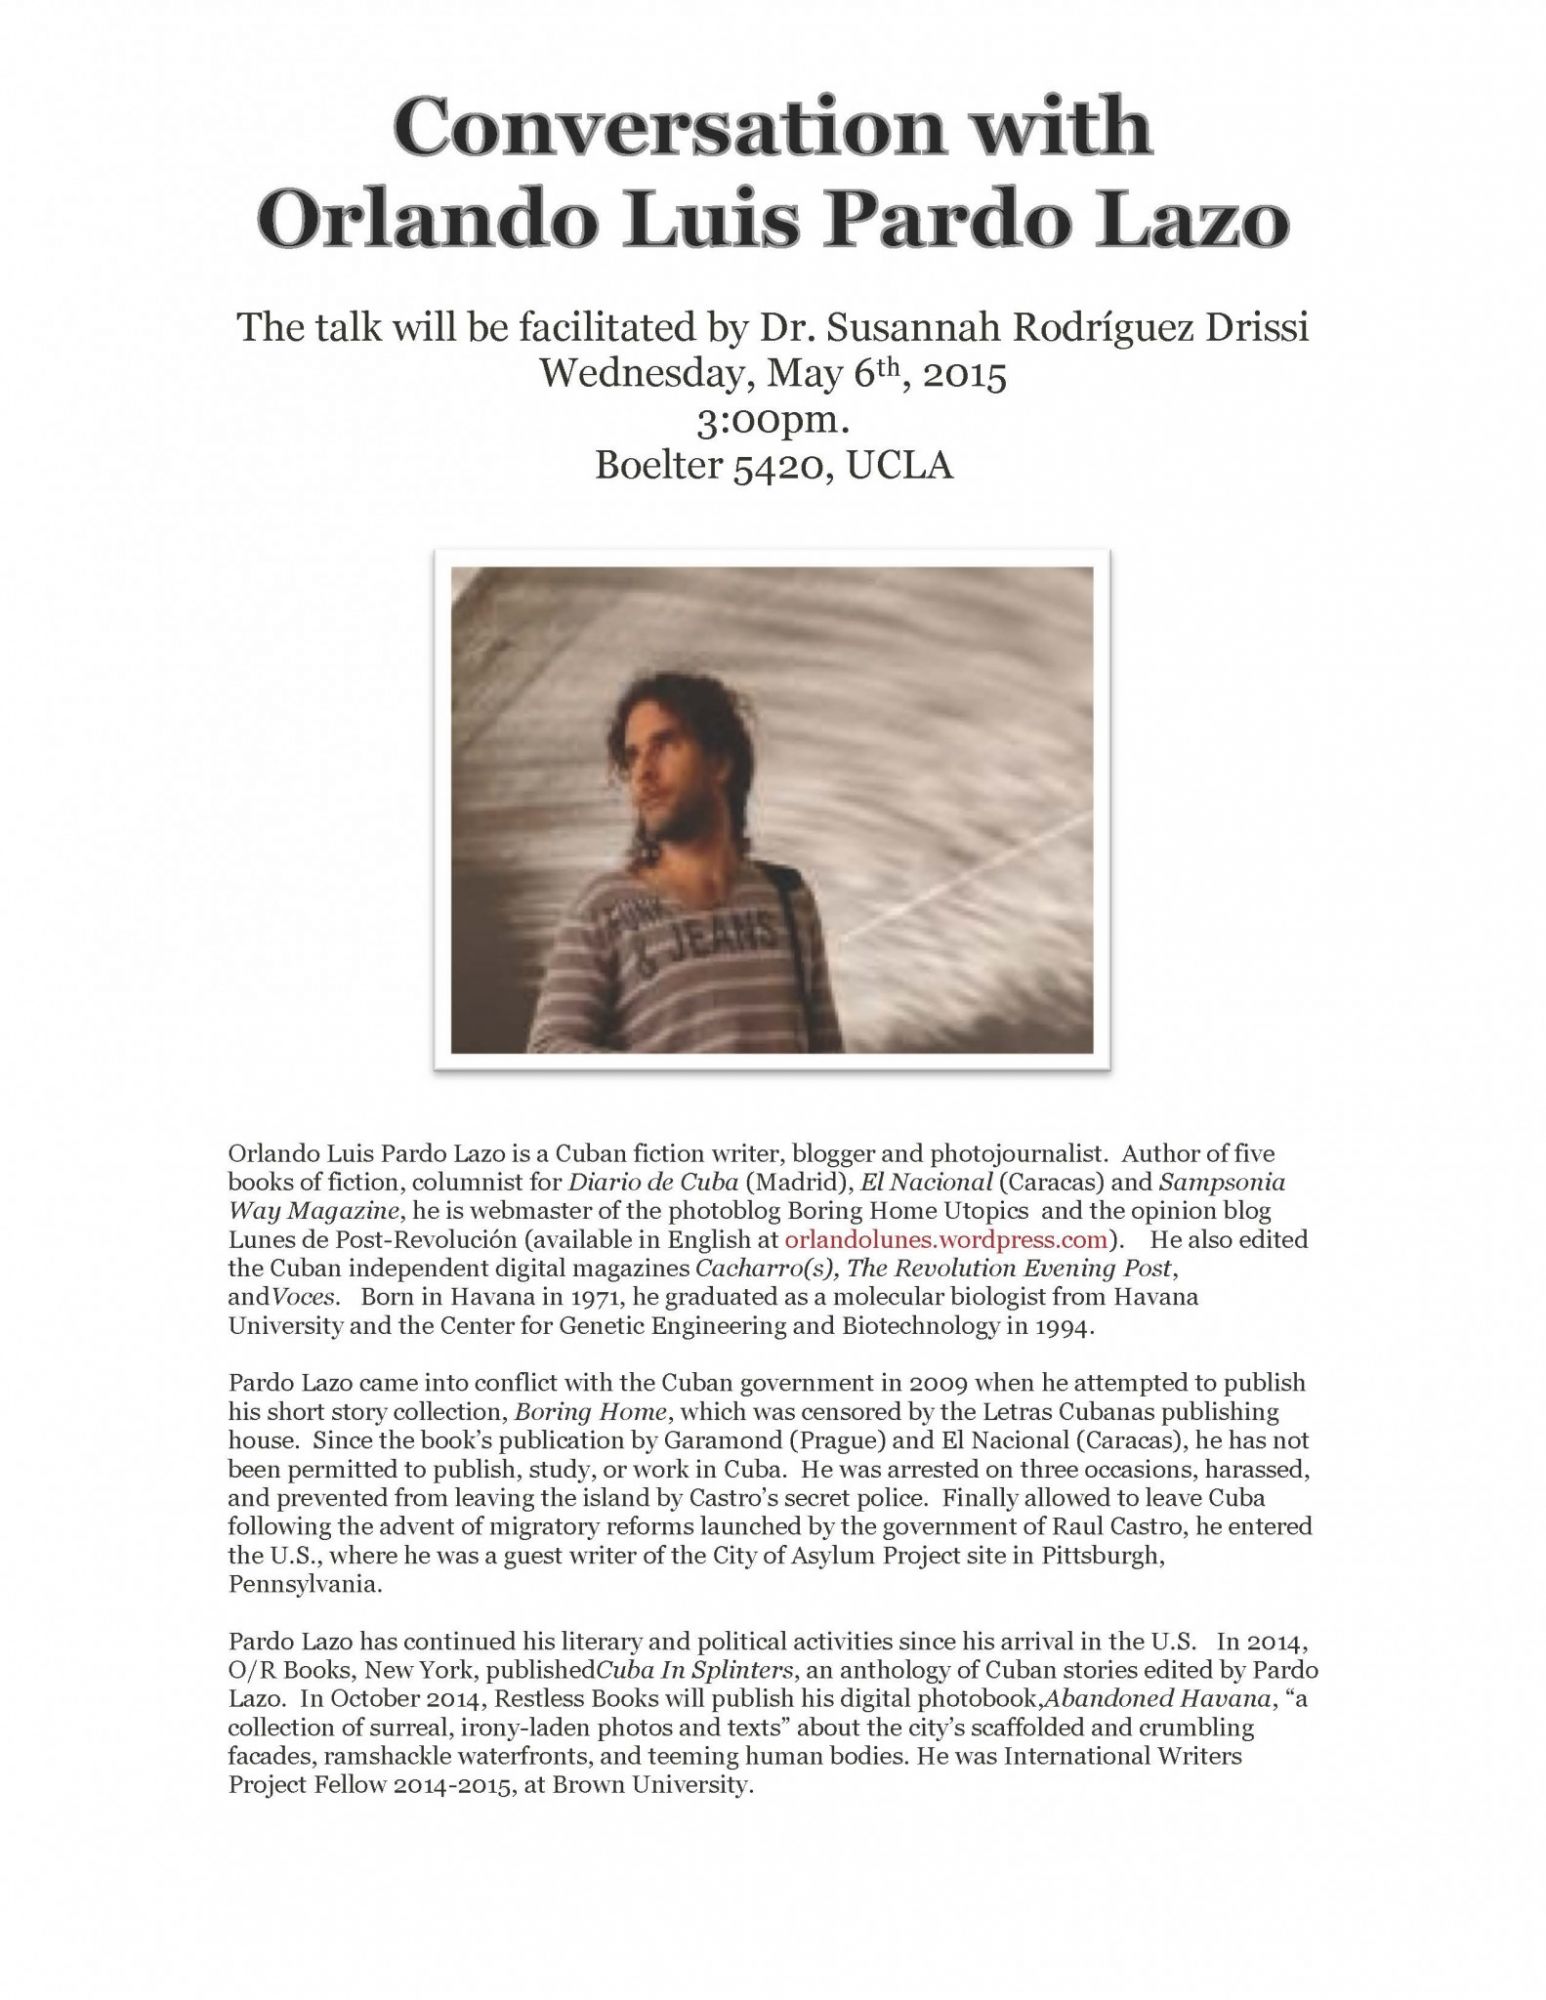 Conversation with Orlando Luis Pardo Lazo